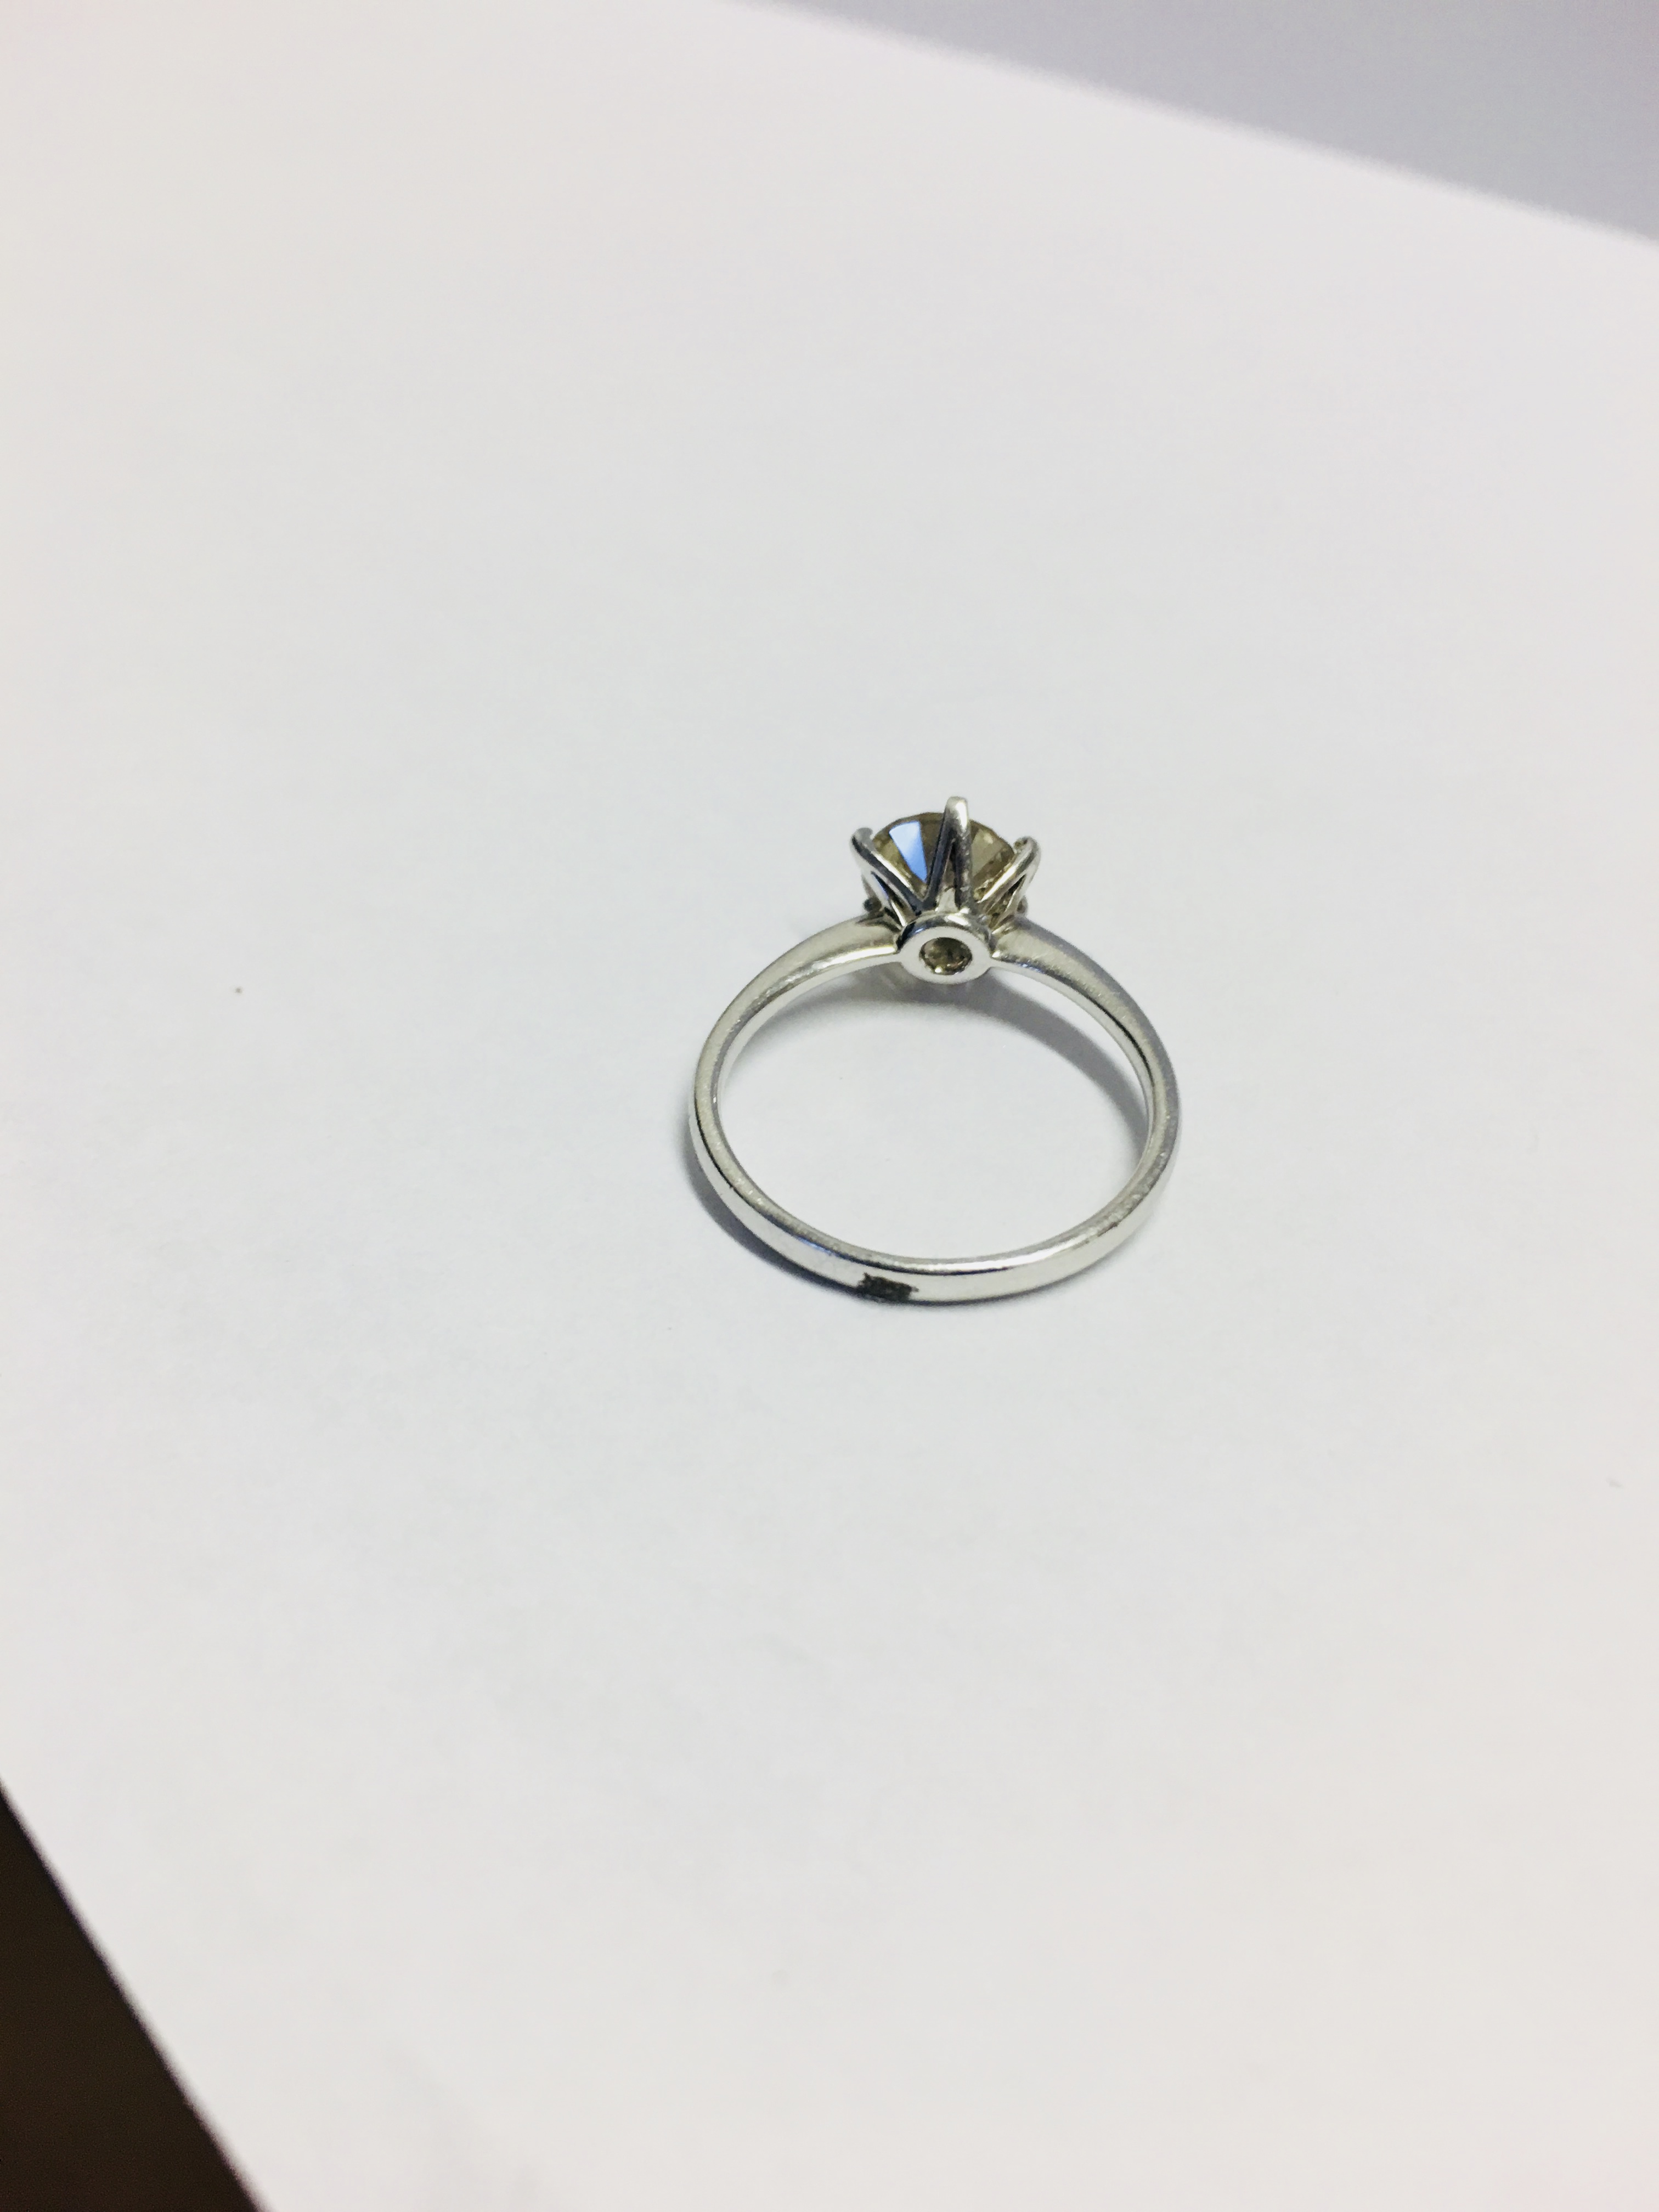 1Ct Brilliant Cut Diamond Solitaire Ring, - Image 4 of 6